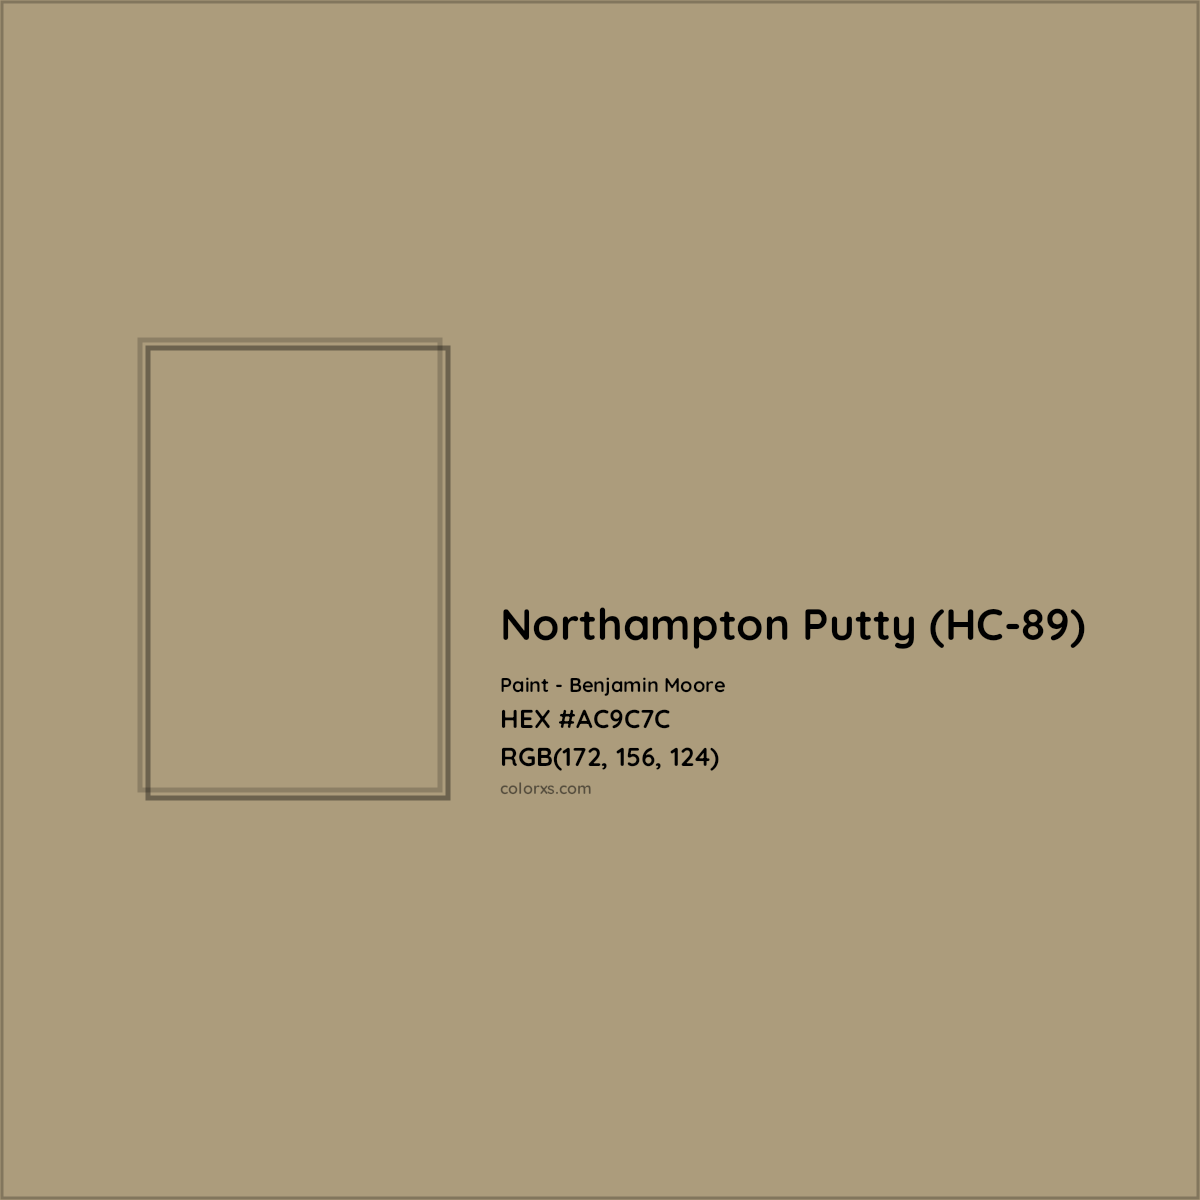 HEX #AC9C7C Northampton Putty (HC-89) Paint Benjamin Moore - Color Code